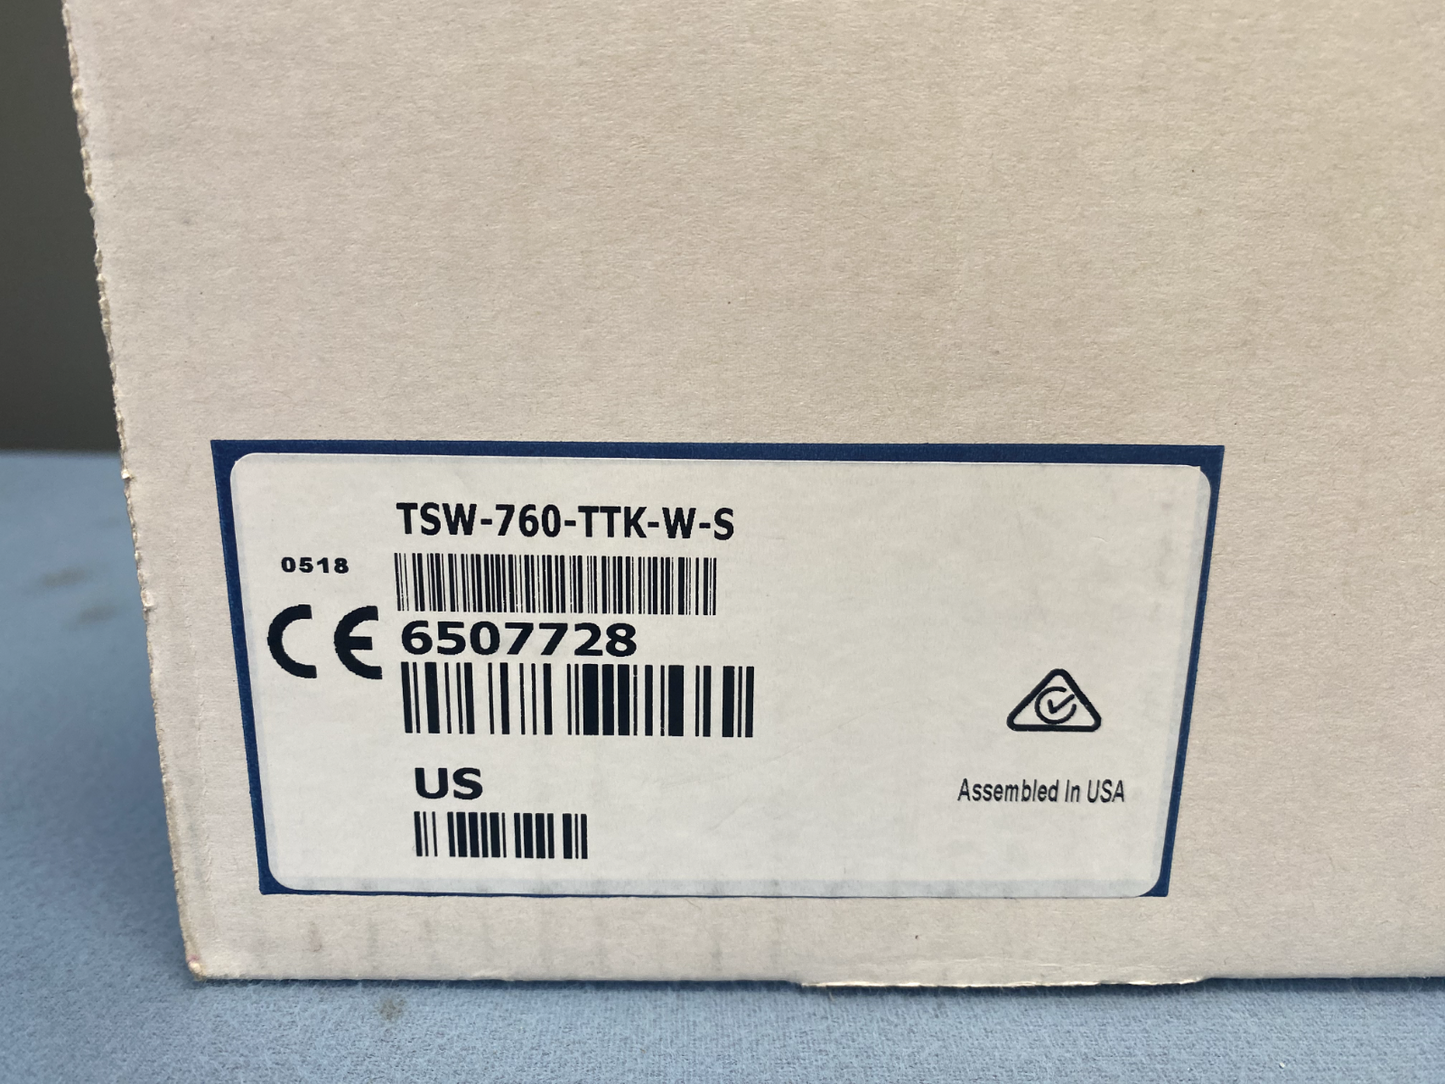 Crestron TSW-760-TTK-W-S Tabletop Kit for TSW-760 &TSS-7, White Smooth | 6507728